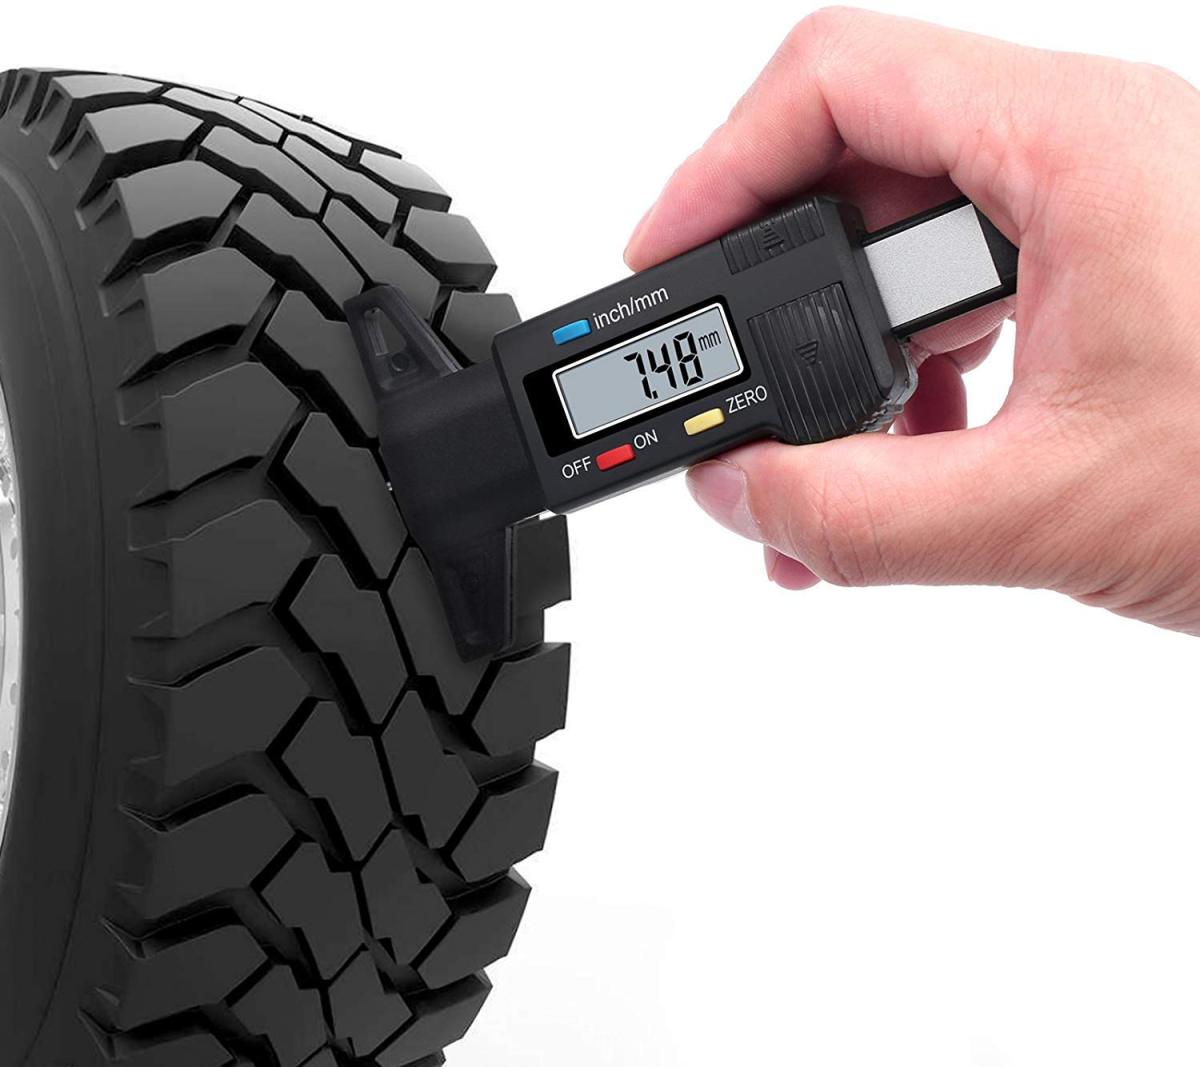  tire teps gauge tire groove measurement depth measurement digital display 0~25mm small size light weight measurement machine gauge automobile car bike maintenance 